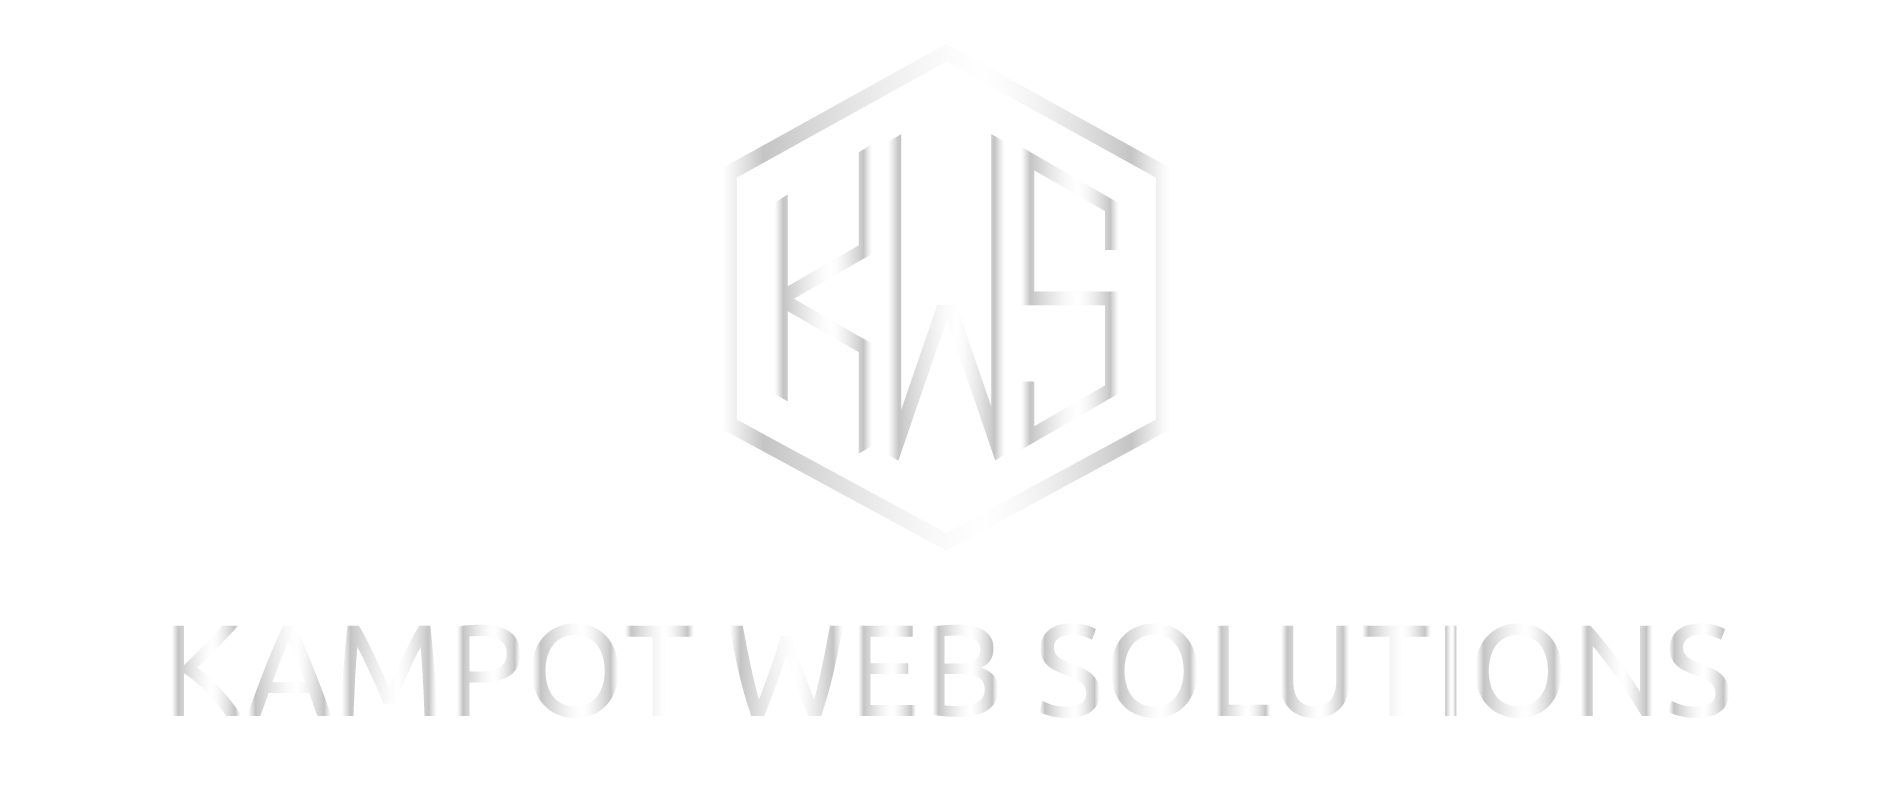 Kampot Web Solutions Logo